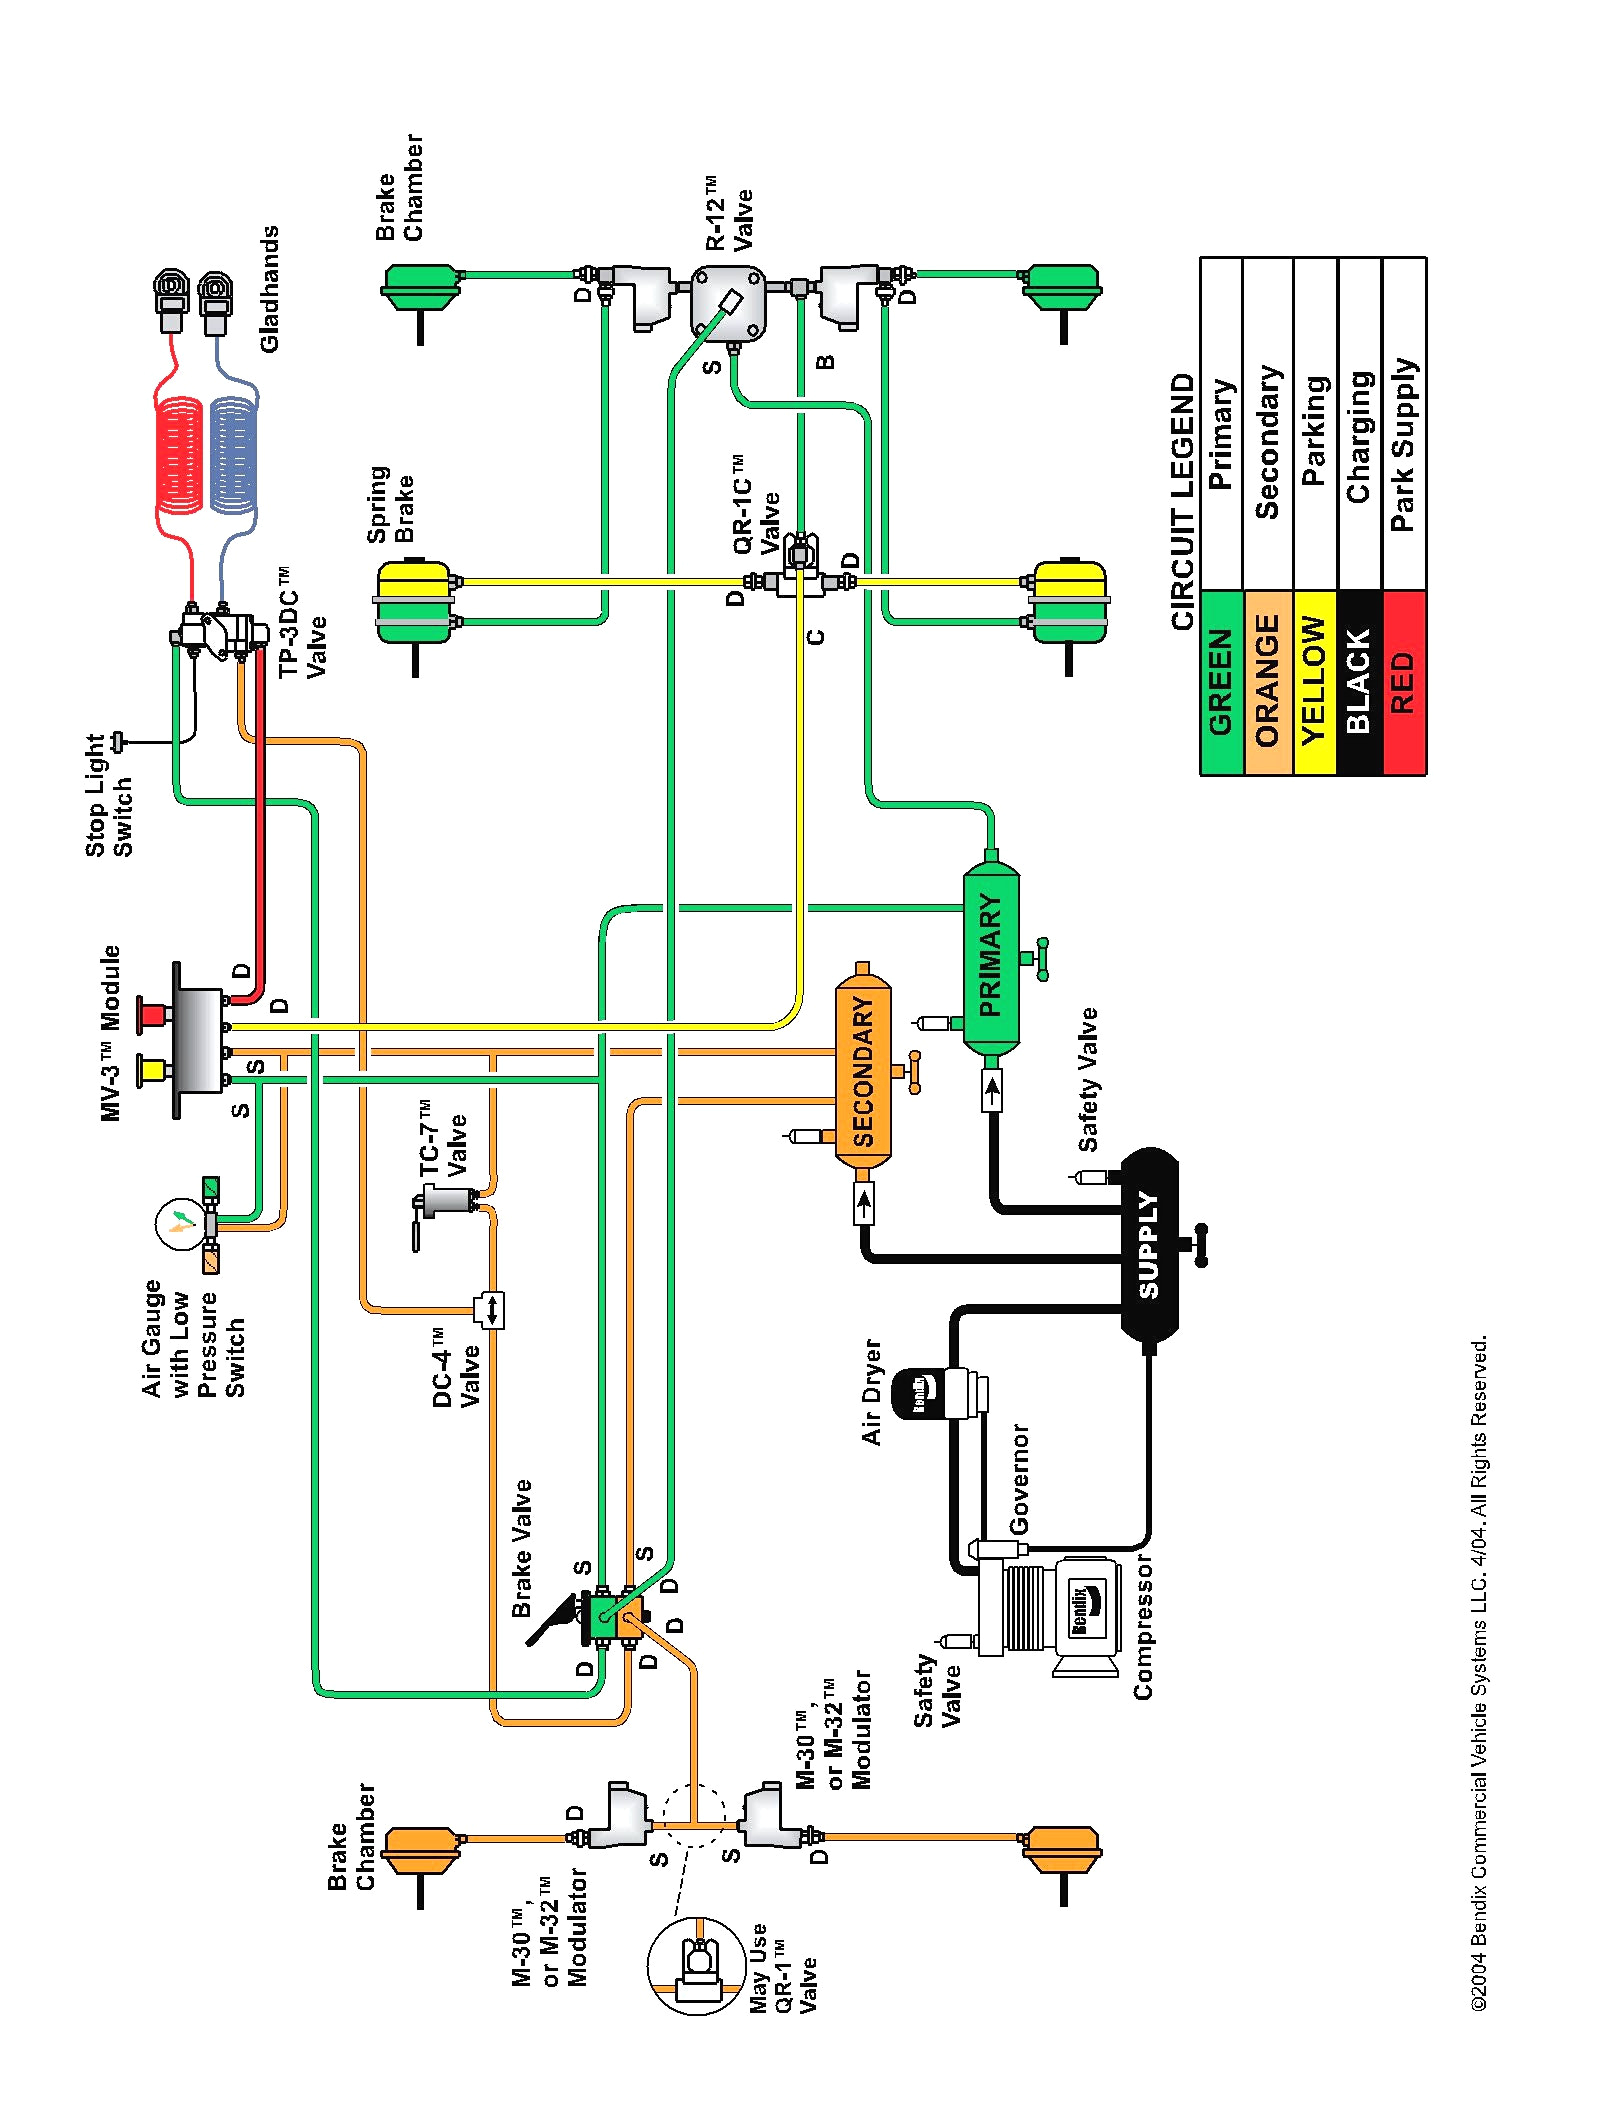 motorcycle hazard lights wiring diagram lovely motorcycle hazard light wiring diagram schematics wiring diagrams